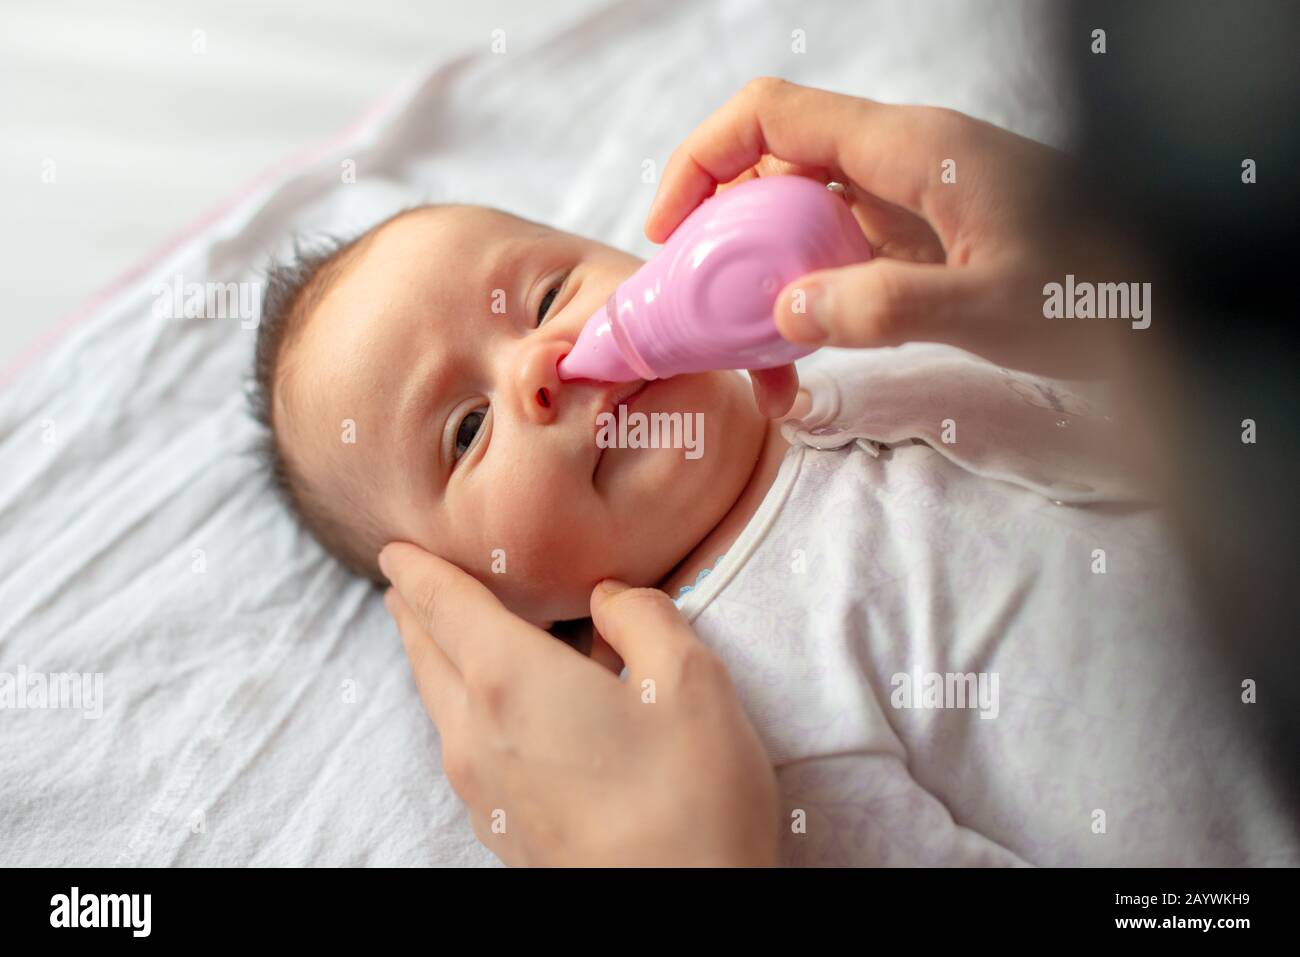 https://c8.alamy.com/comp/2AYWKH9/mother-using-baby-nasal-aspirator-mucus-nose-suction-2AYWKH9.jpg